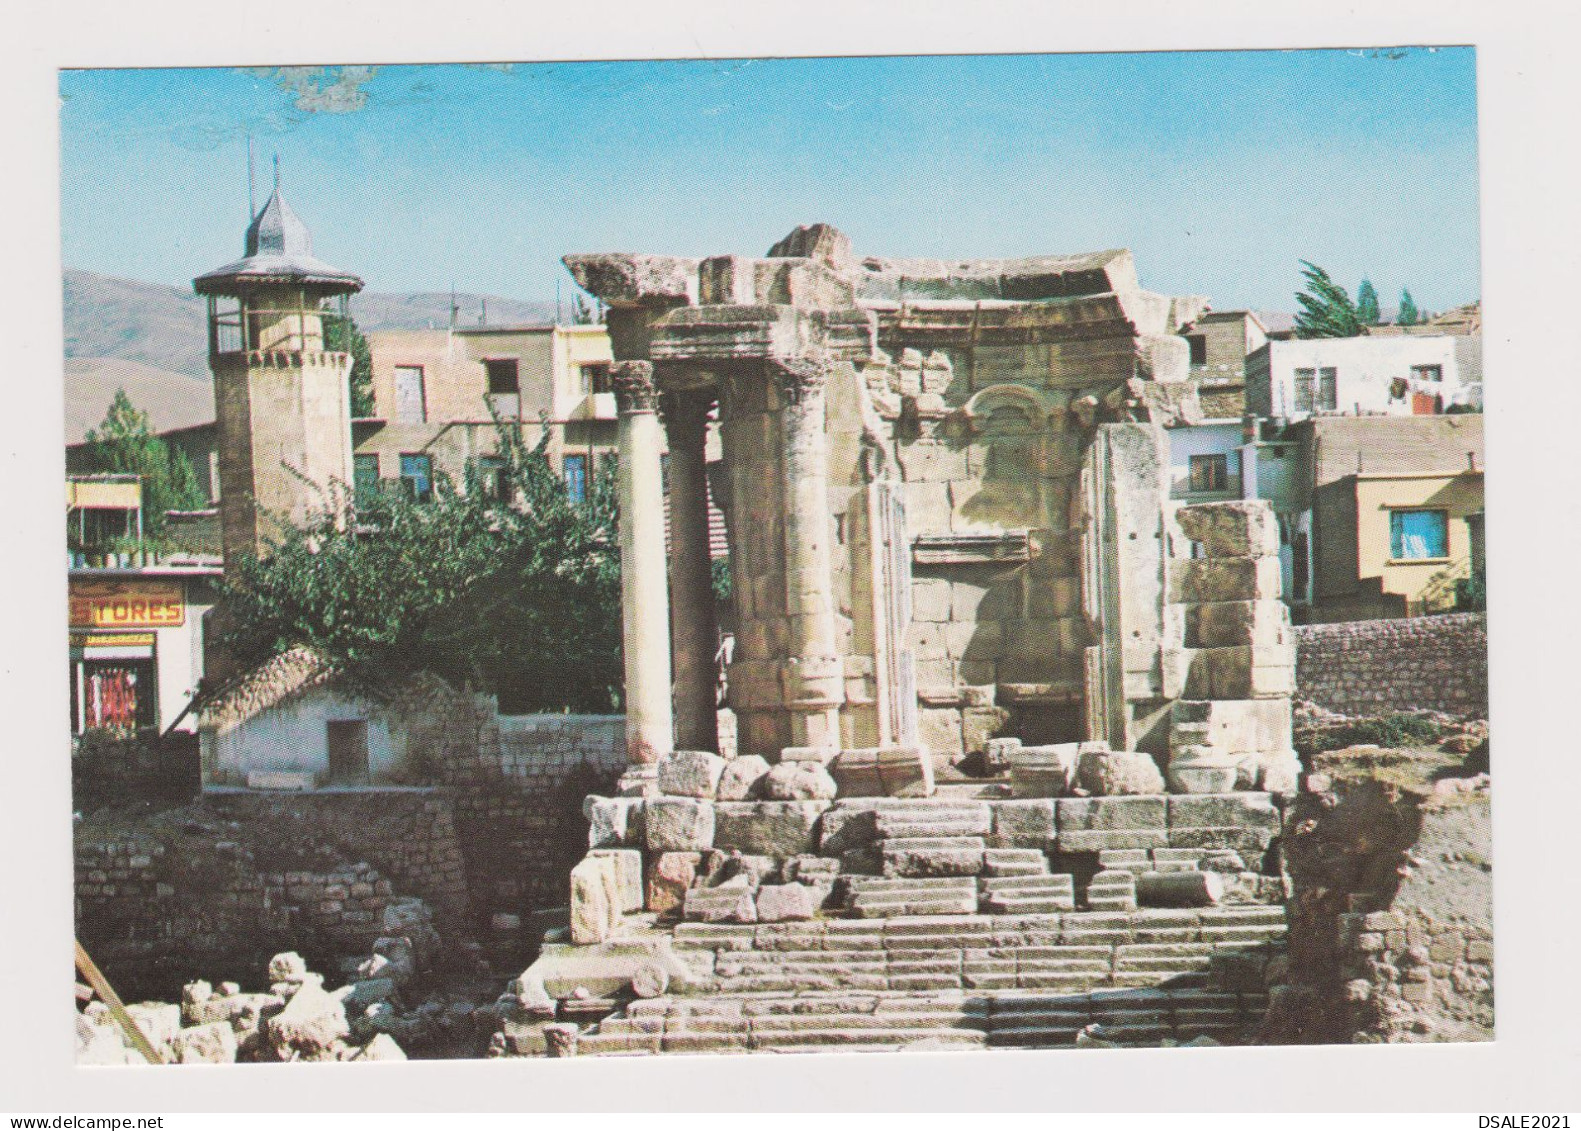 Lebanon Libanon Liban Baalbek-Heliopolis Venus Temple Ruins View, Vintage Photo Postcard RPPc AK (1200) - Liban